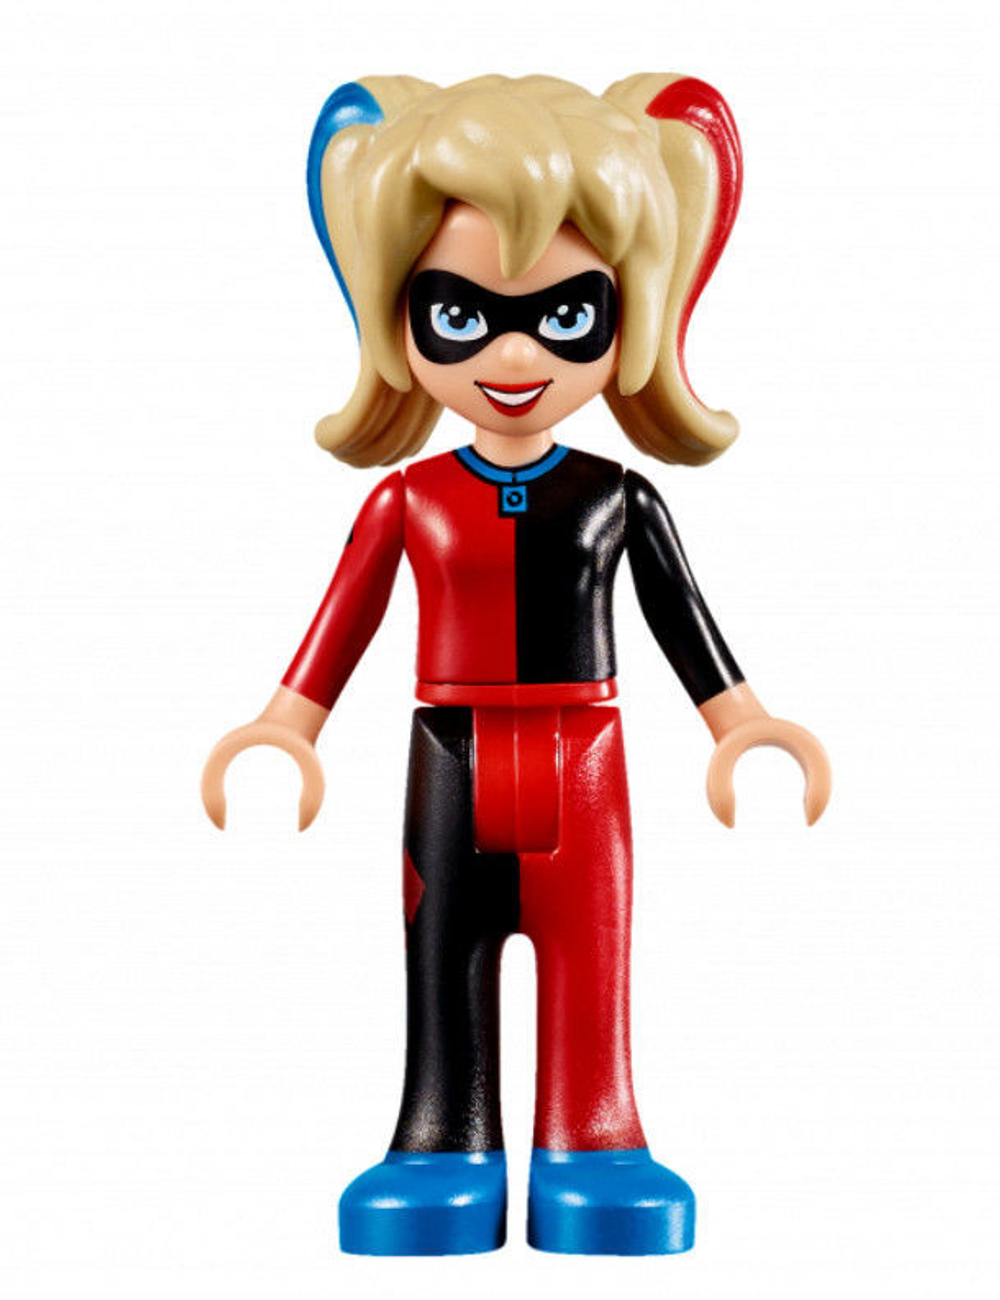 LEGO DC Super Hero Girls: Дом Харли Квинн 41236 — Harley Quinn Dorm — Лего Девушки-супергерои